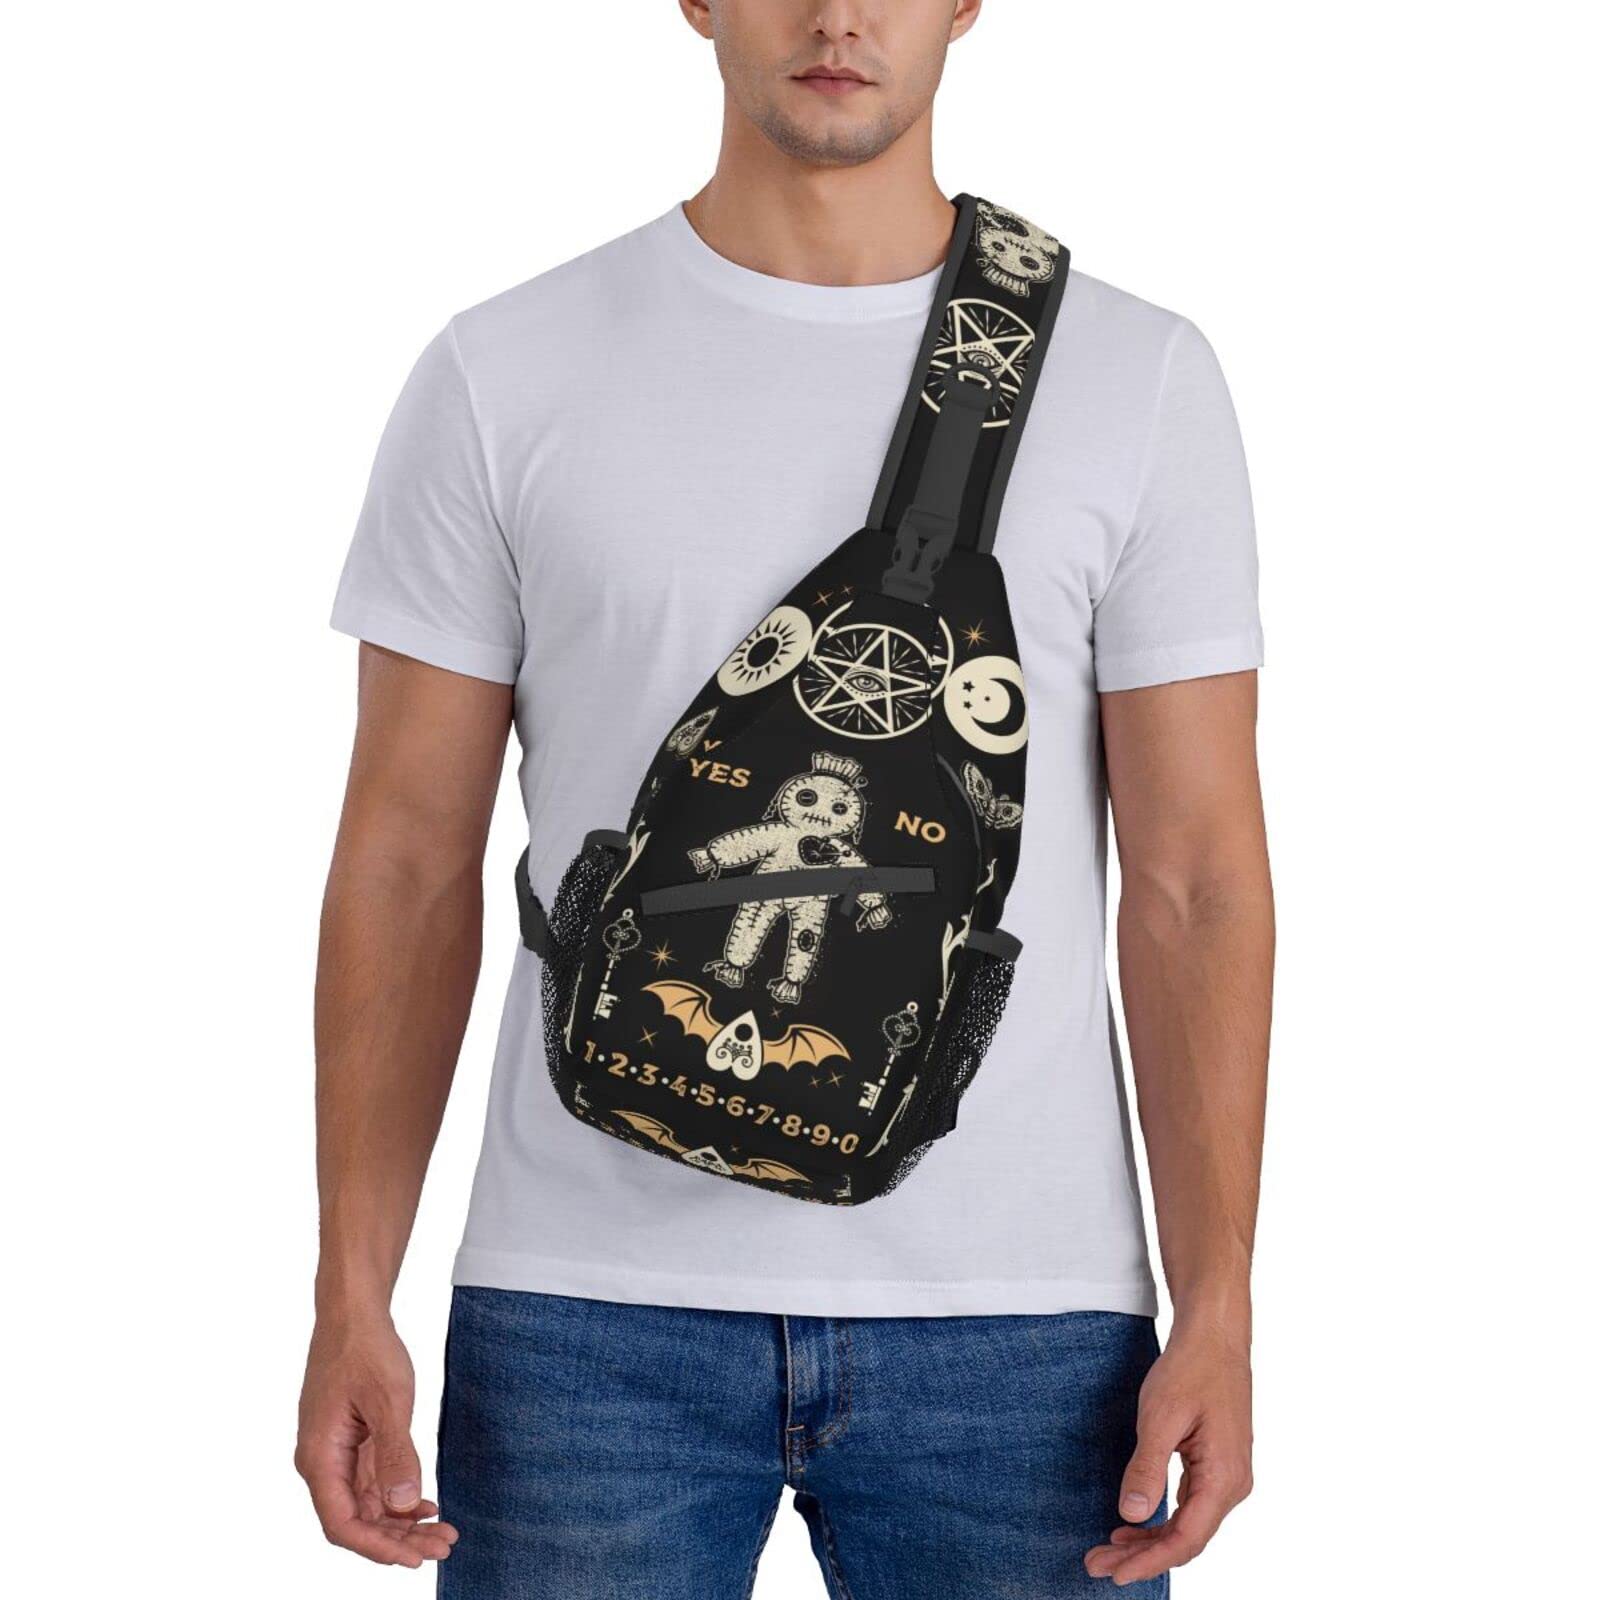 BCQJNB Goth Coffin Horror Gothic Sling Backpack Crossbody Shoulder Bag Travel Hiking Daypack Gifts